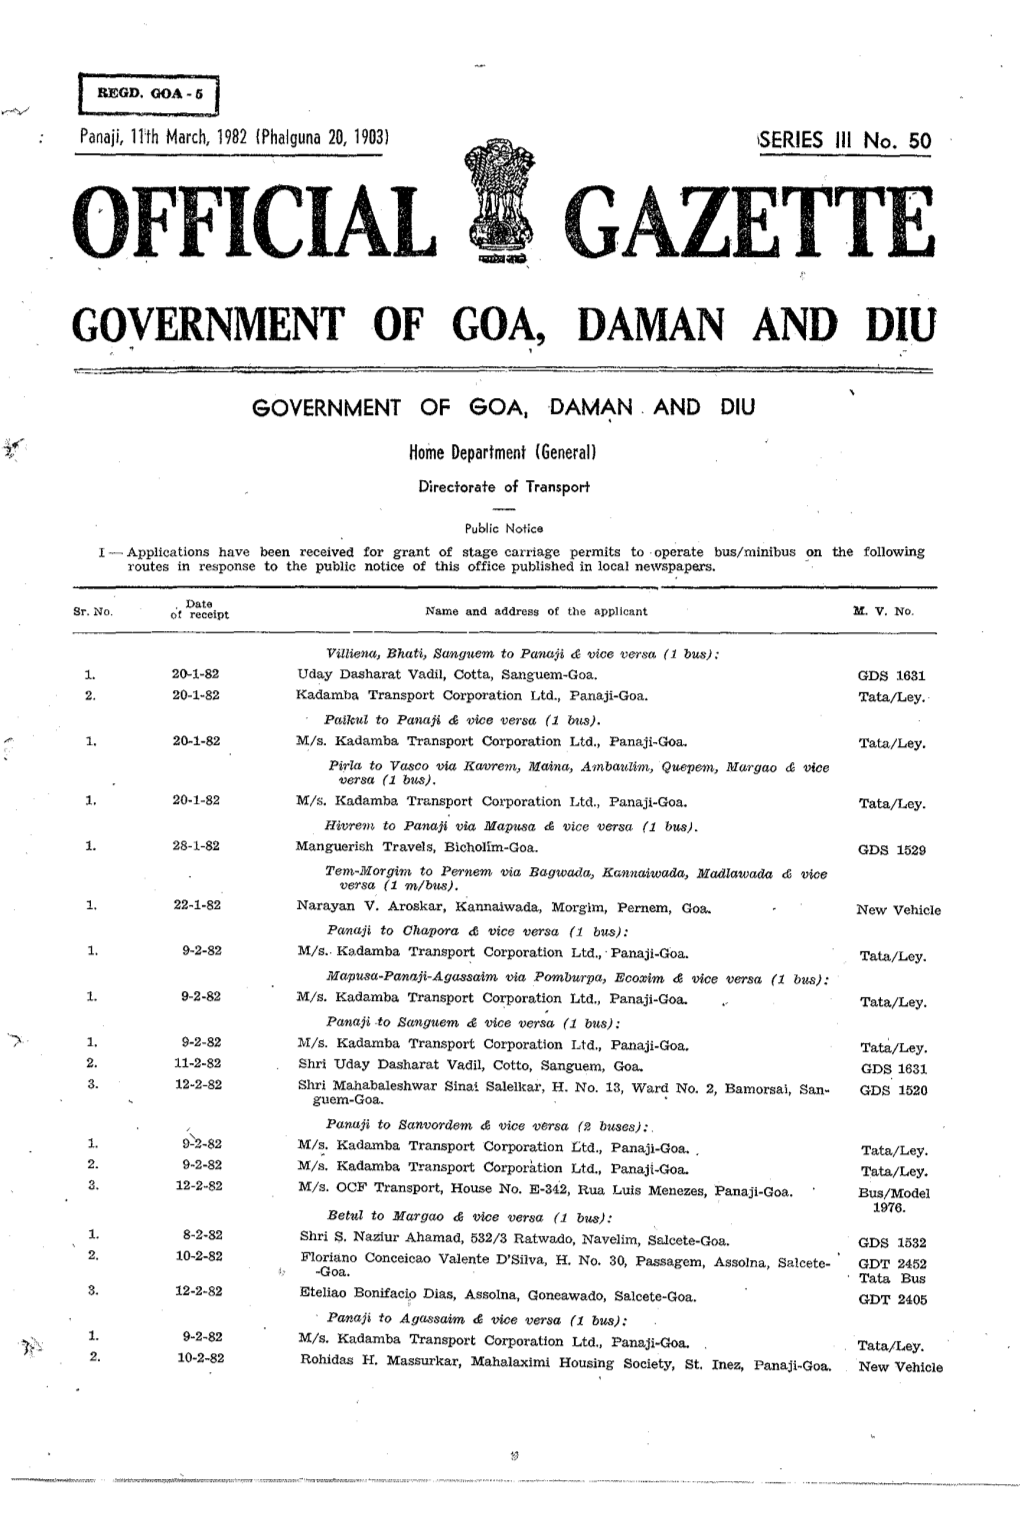 Official Gazette Government of Goa, Daman and Diu - , - , Government of Goa, Daman and Diu